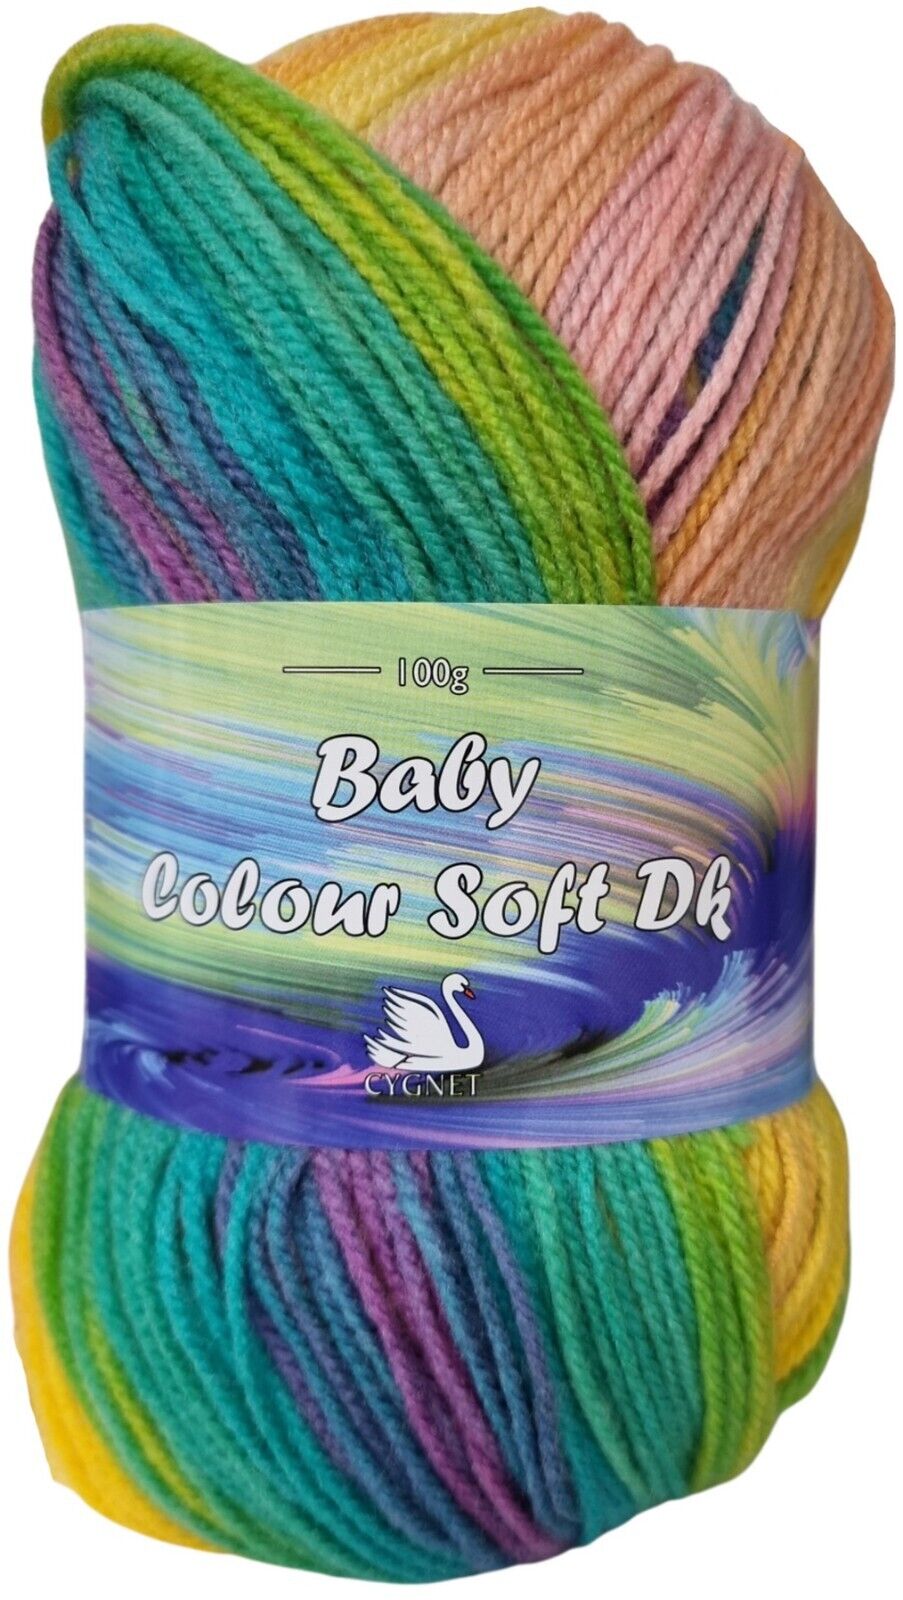 Cygnet BABY COLOUR SOFT DK Knitting Yarn / Wool - 100g - Cloverdale